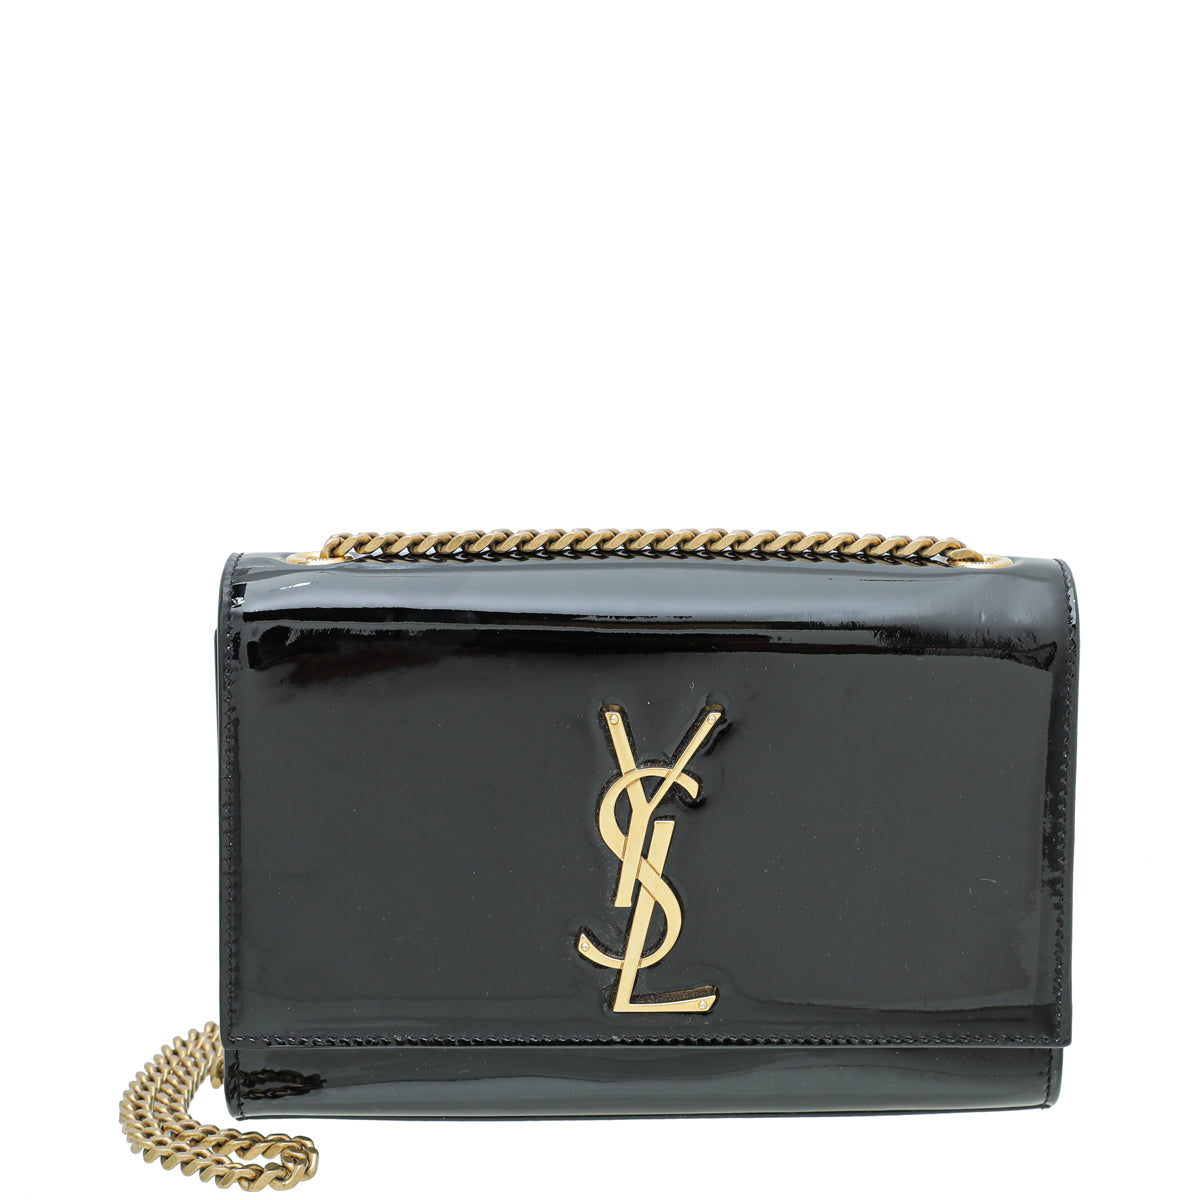 YSL Black Kate Small Chain Bag